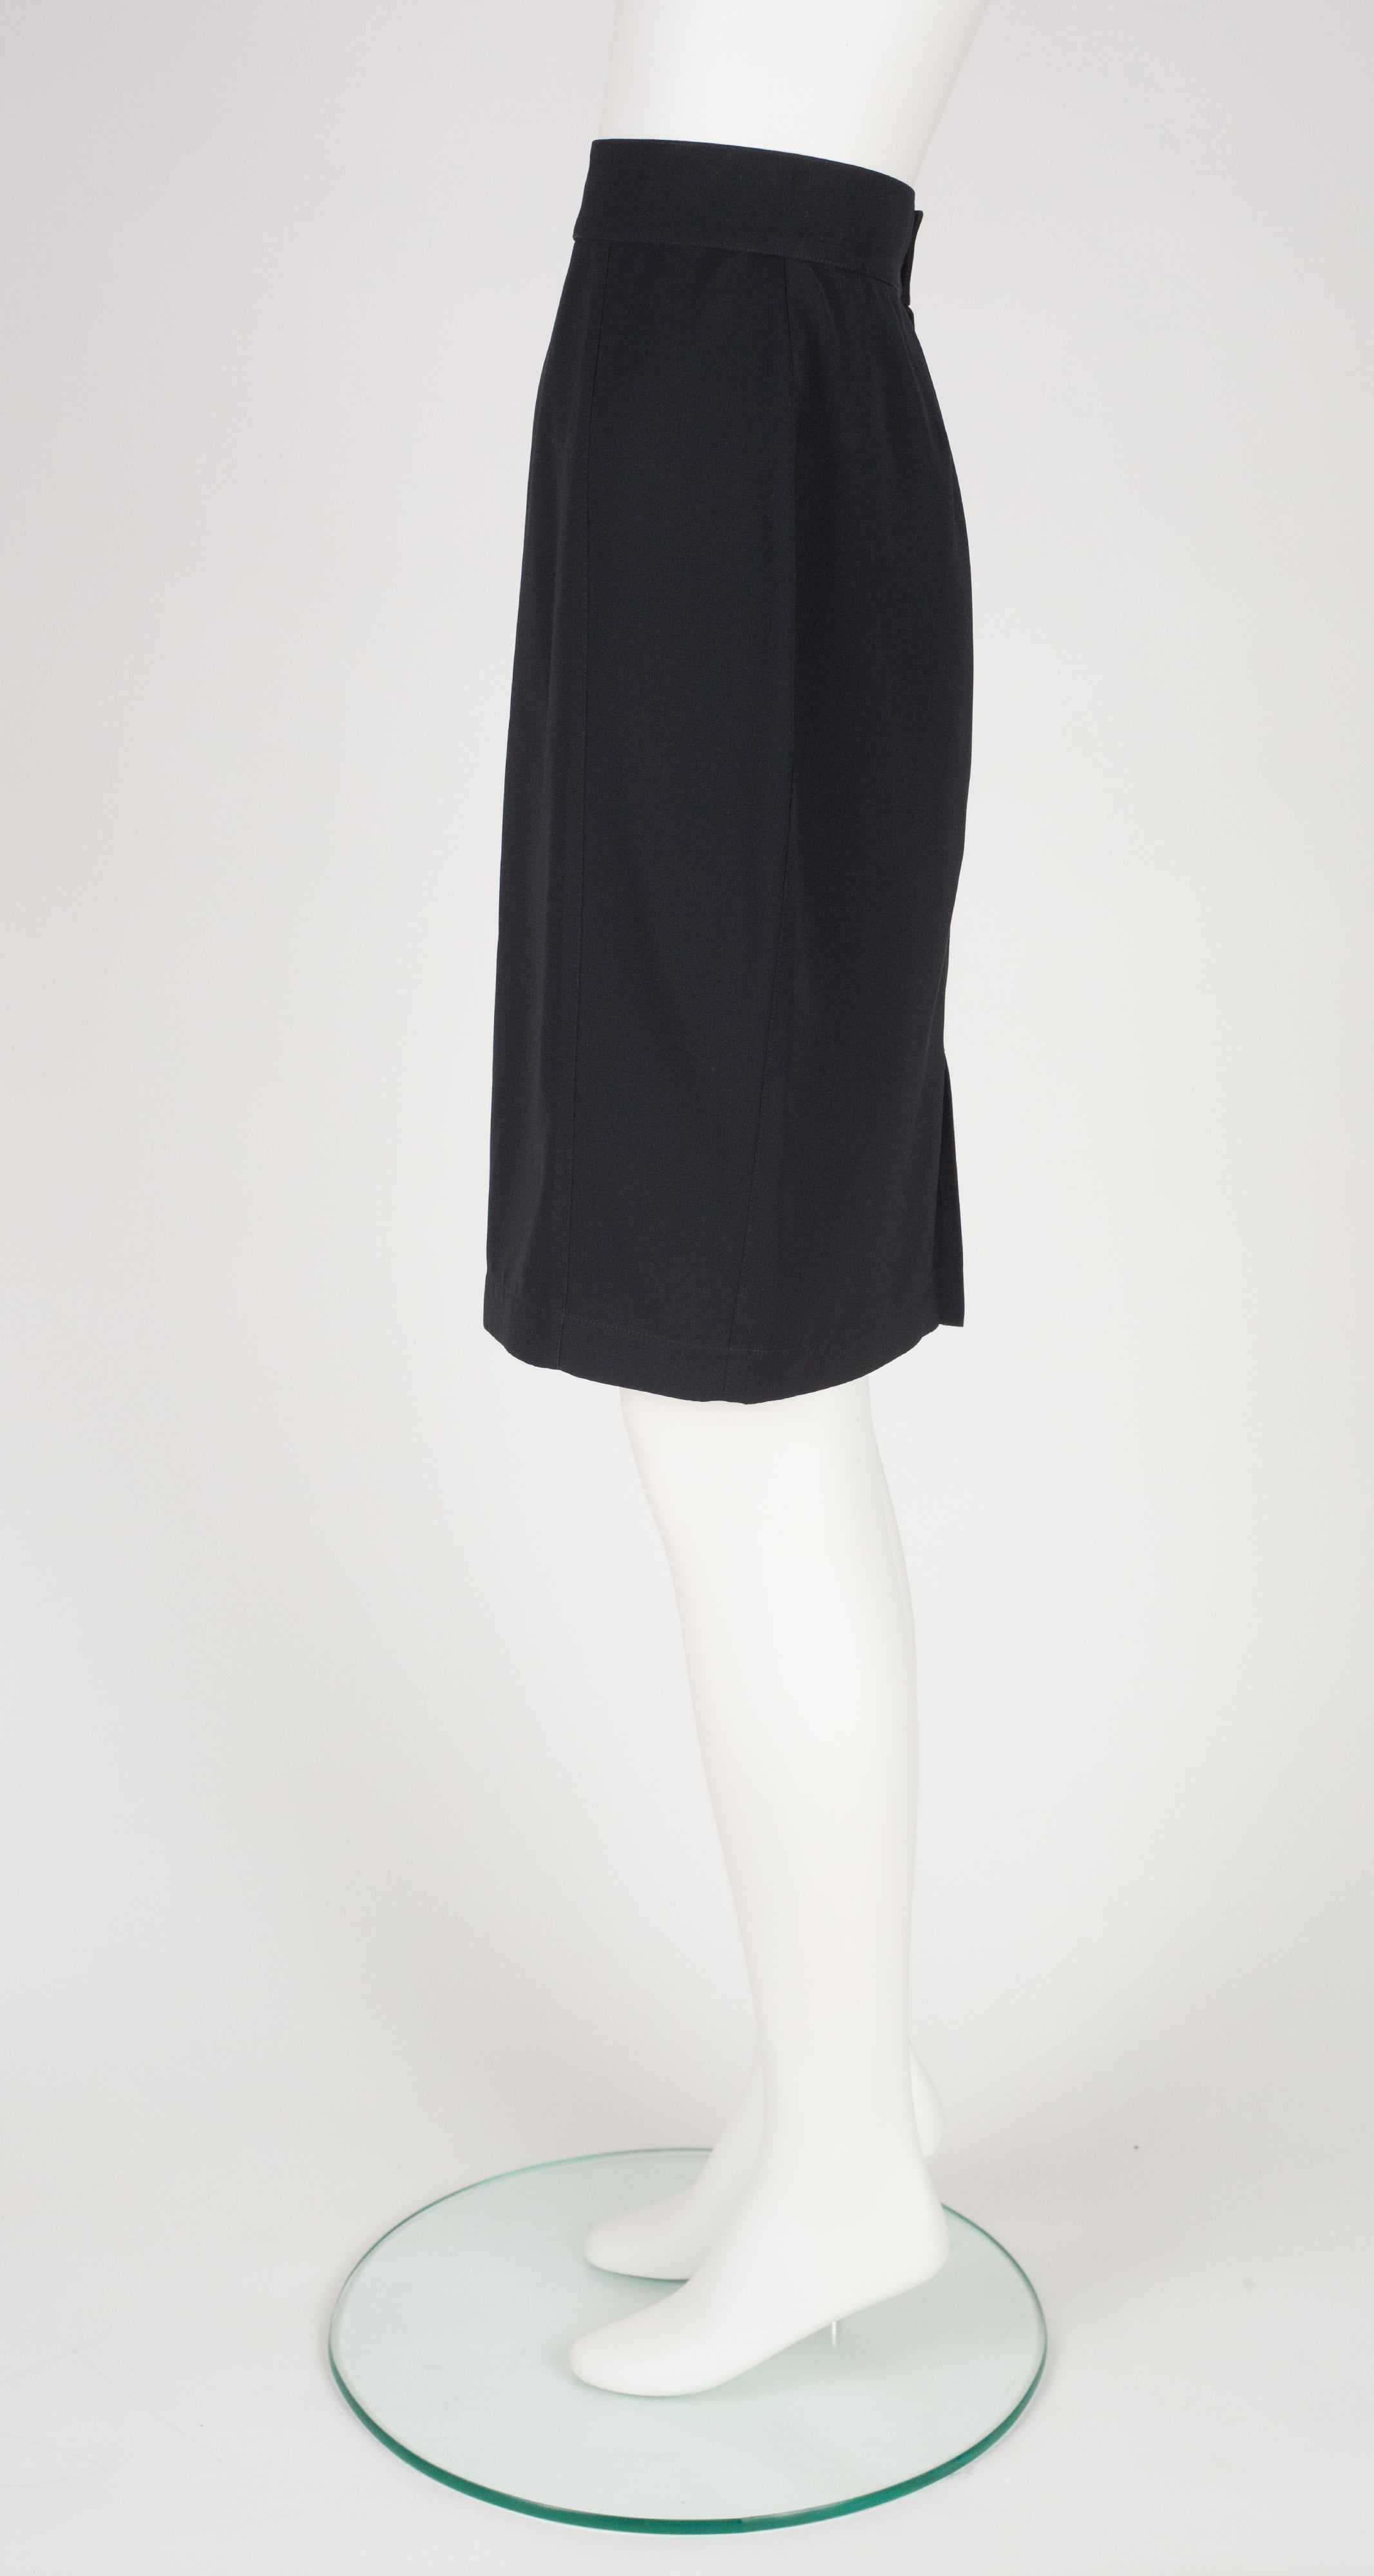 1990s Black Gabardine High-Waisted Pencil Skirt